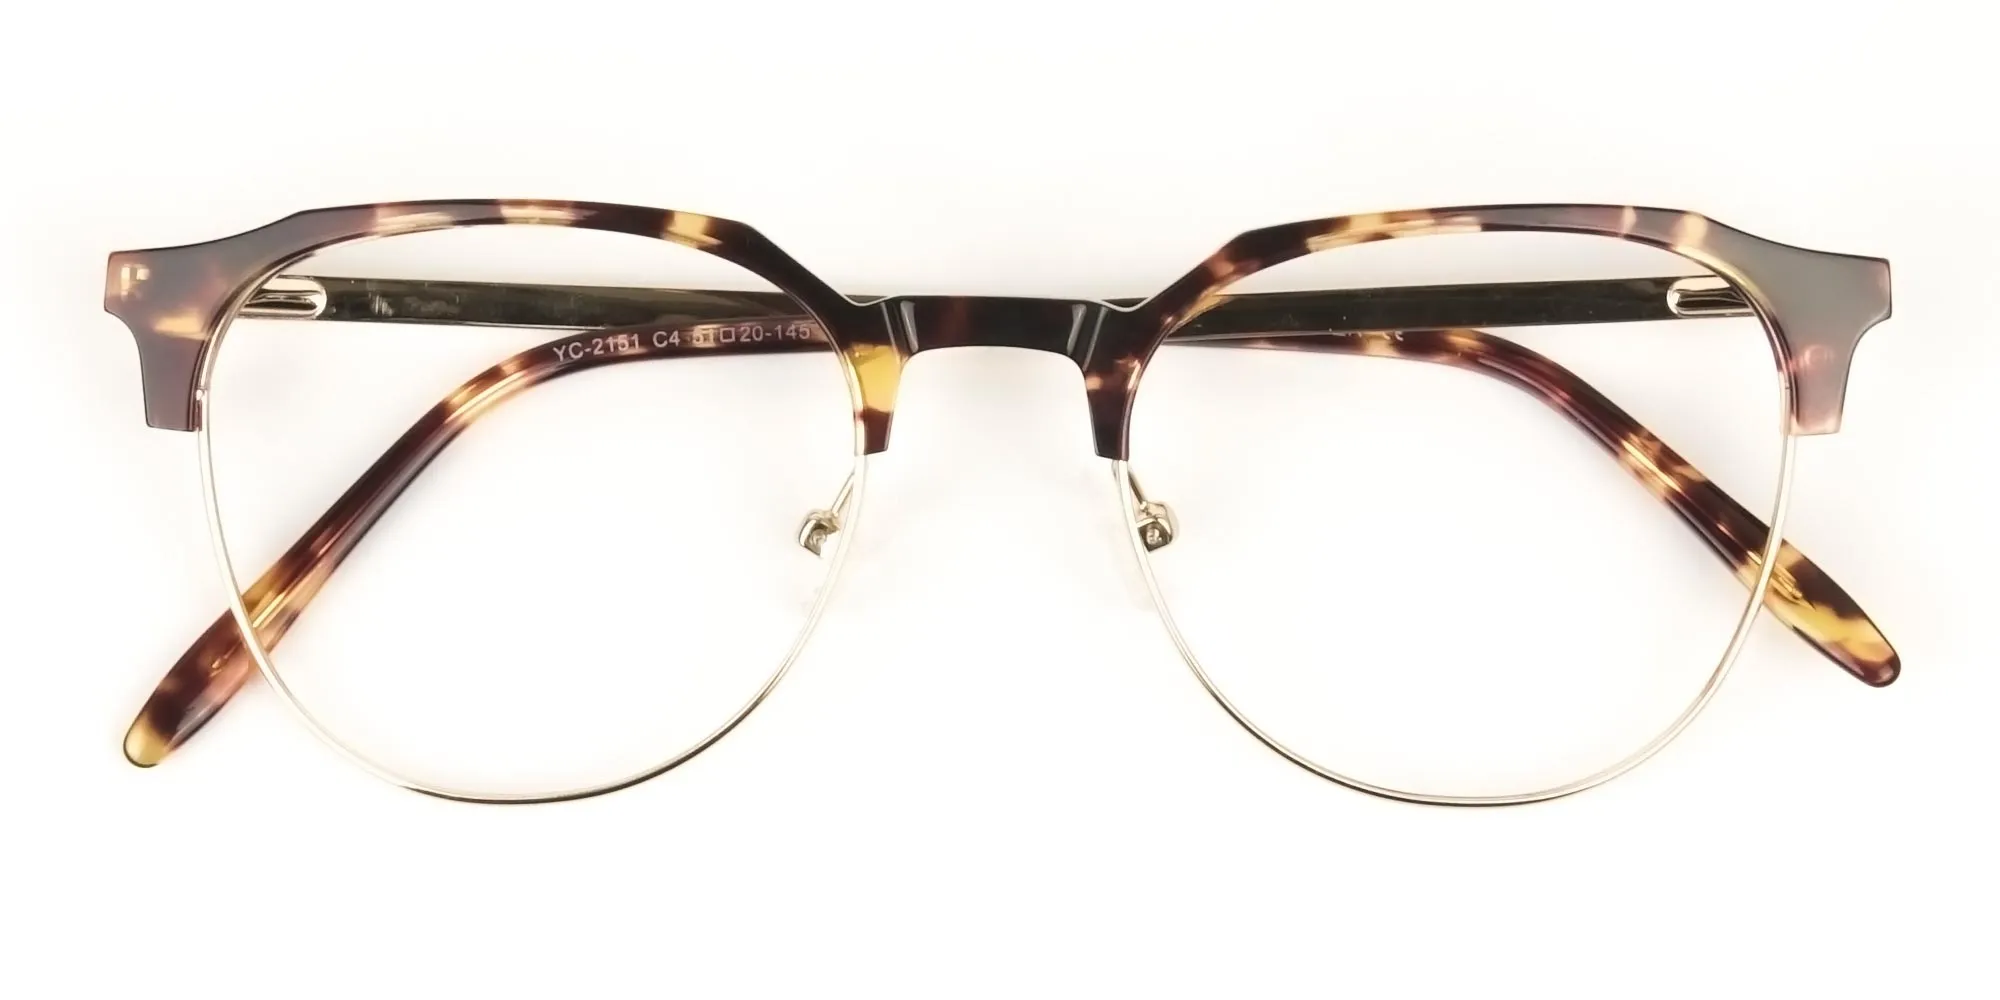 Clubmaster Glasses Tortoise & Gold  - 2